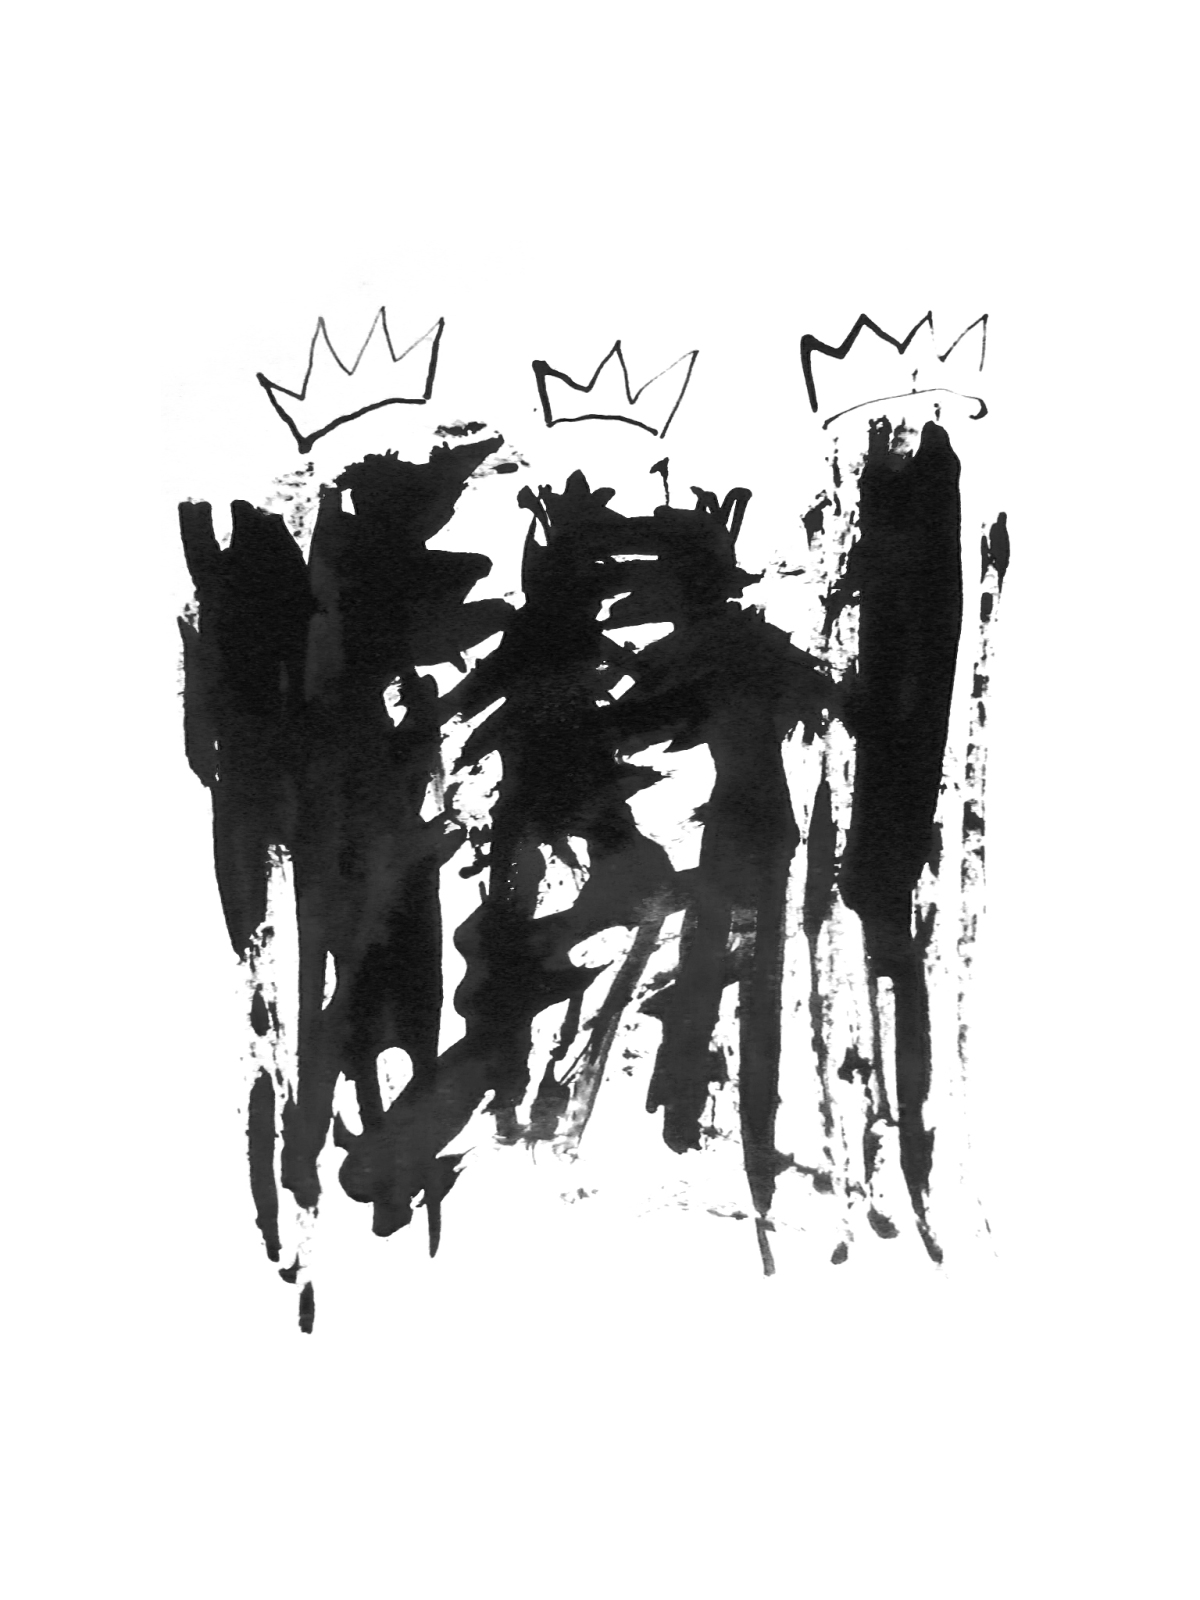 die Heiligen drei Könige – the three holy kings …